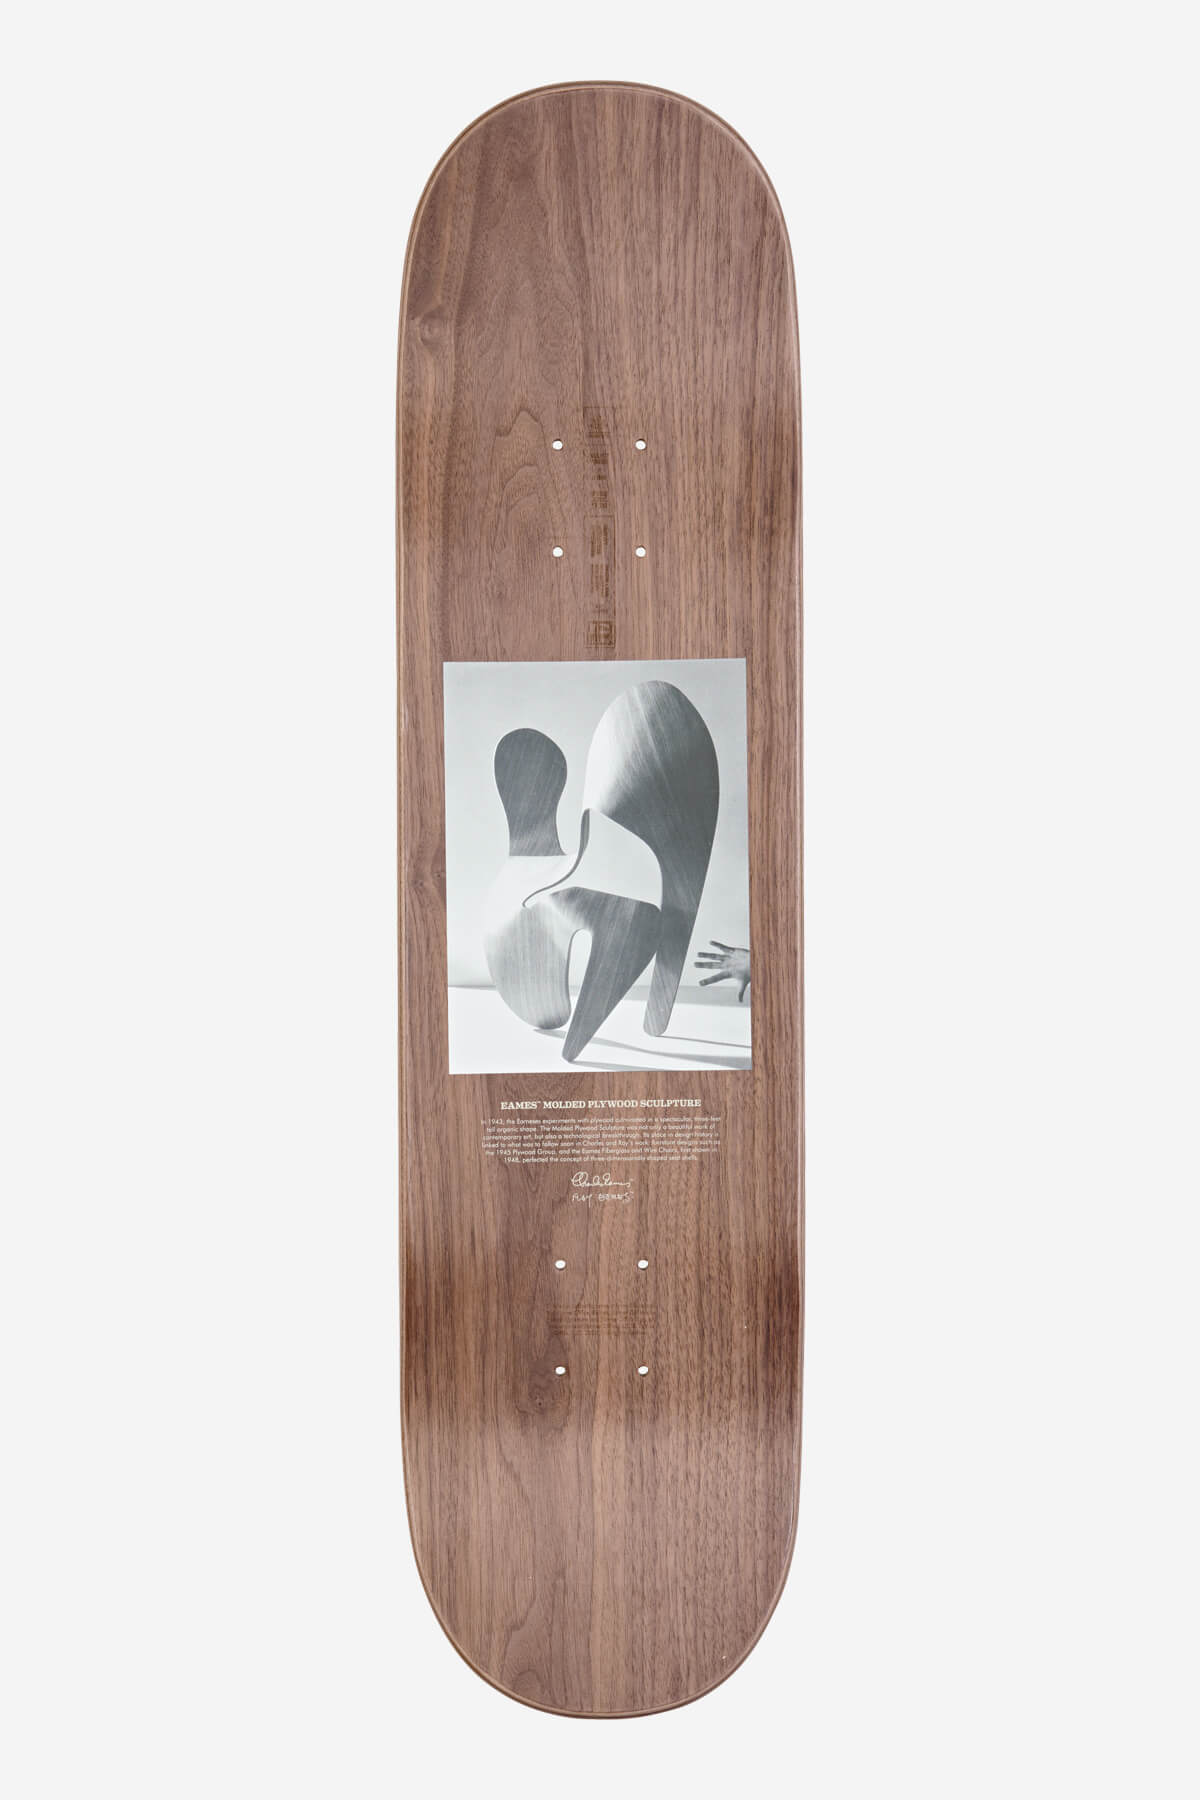 Globe - Eames Silhouette - Plywood Sculpture - 8.0" Skateboard Deck